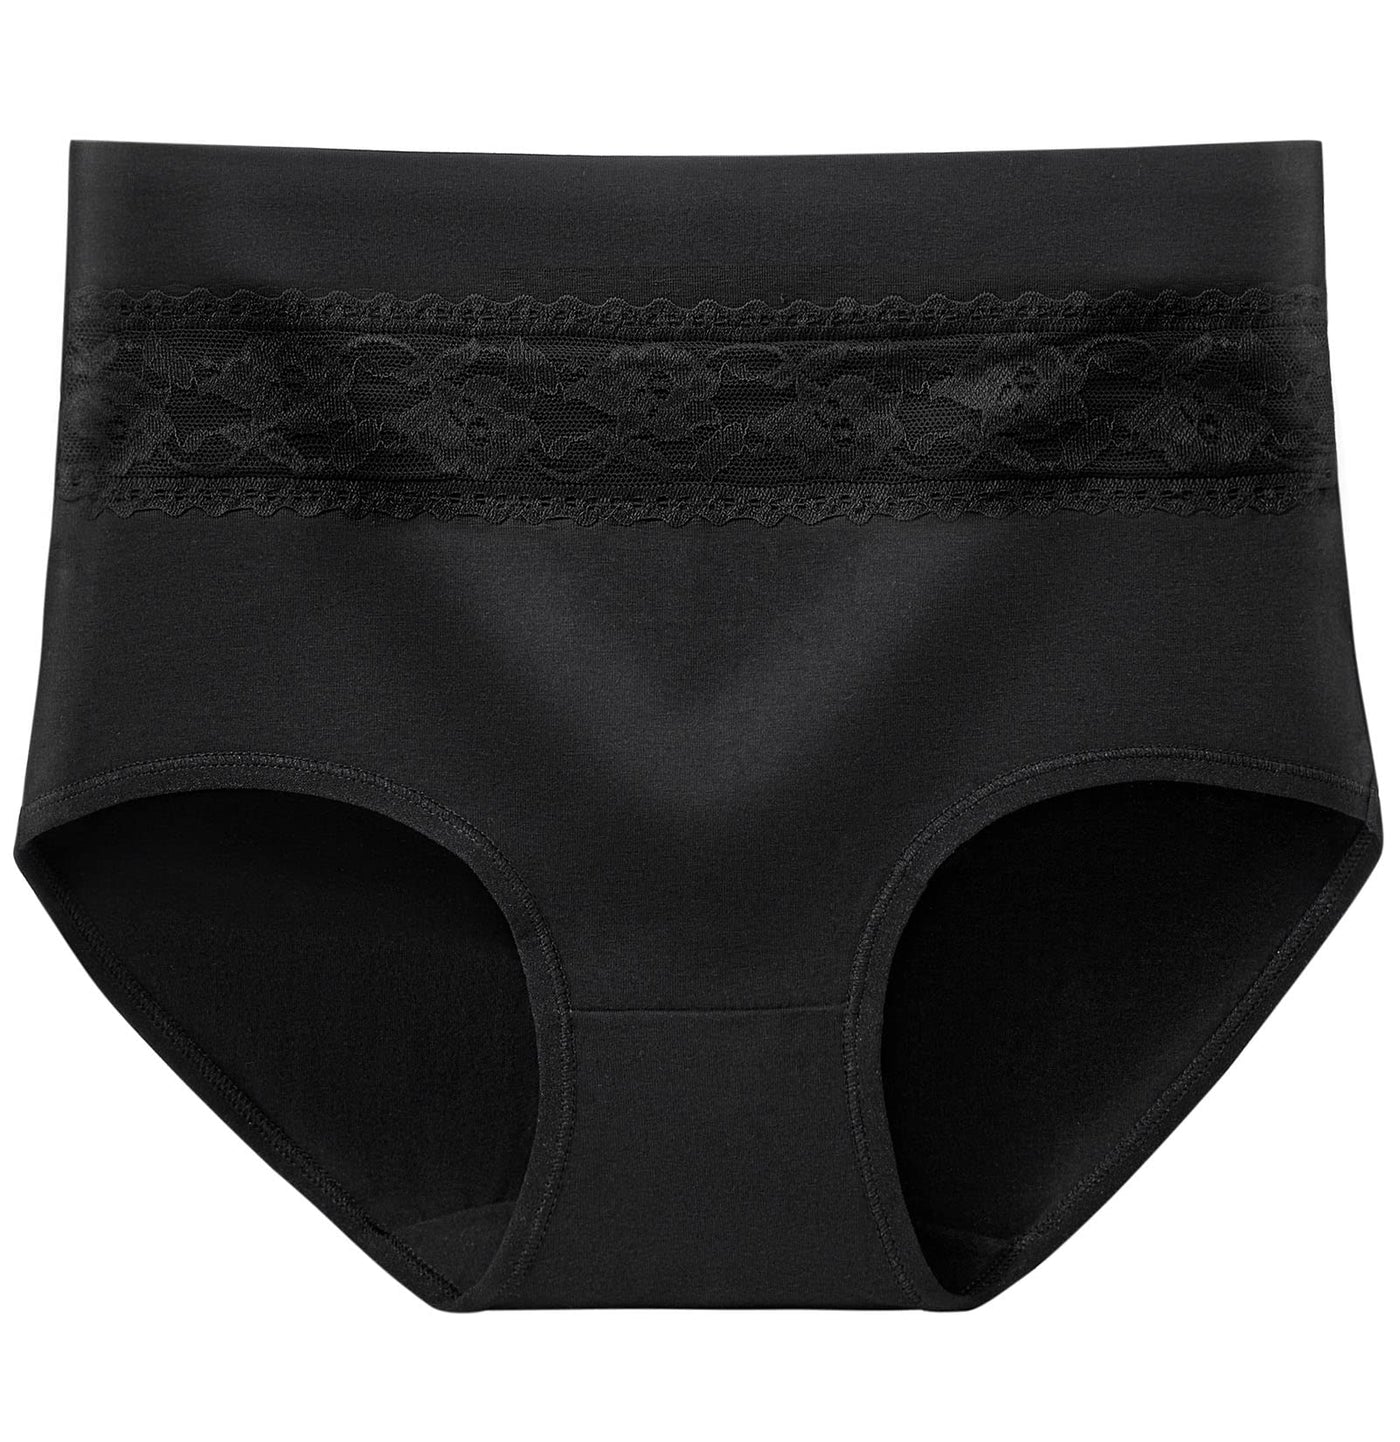 HAVVIS Women's High Waist Knickers Ladies Cotton Briefs Underwear Full Back  Coverage Panties Plus Size Multipack Brief 06 - 5 Pack - Black S